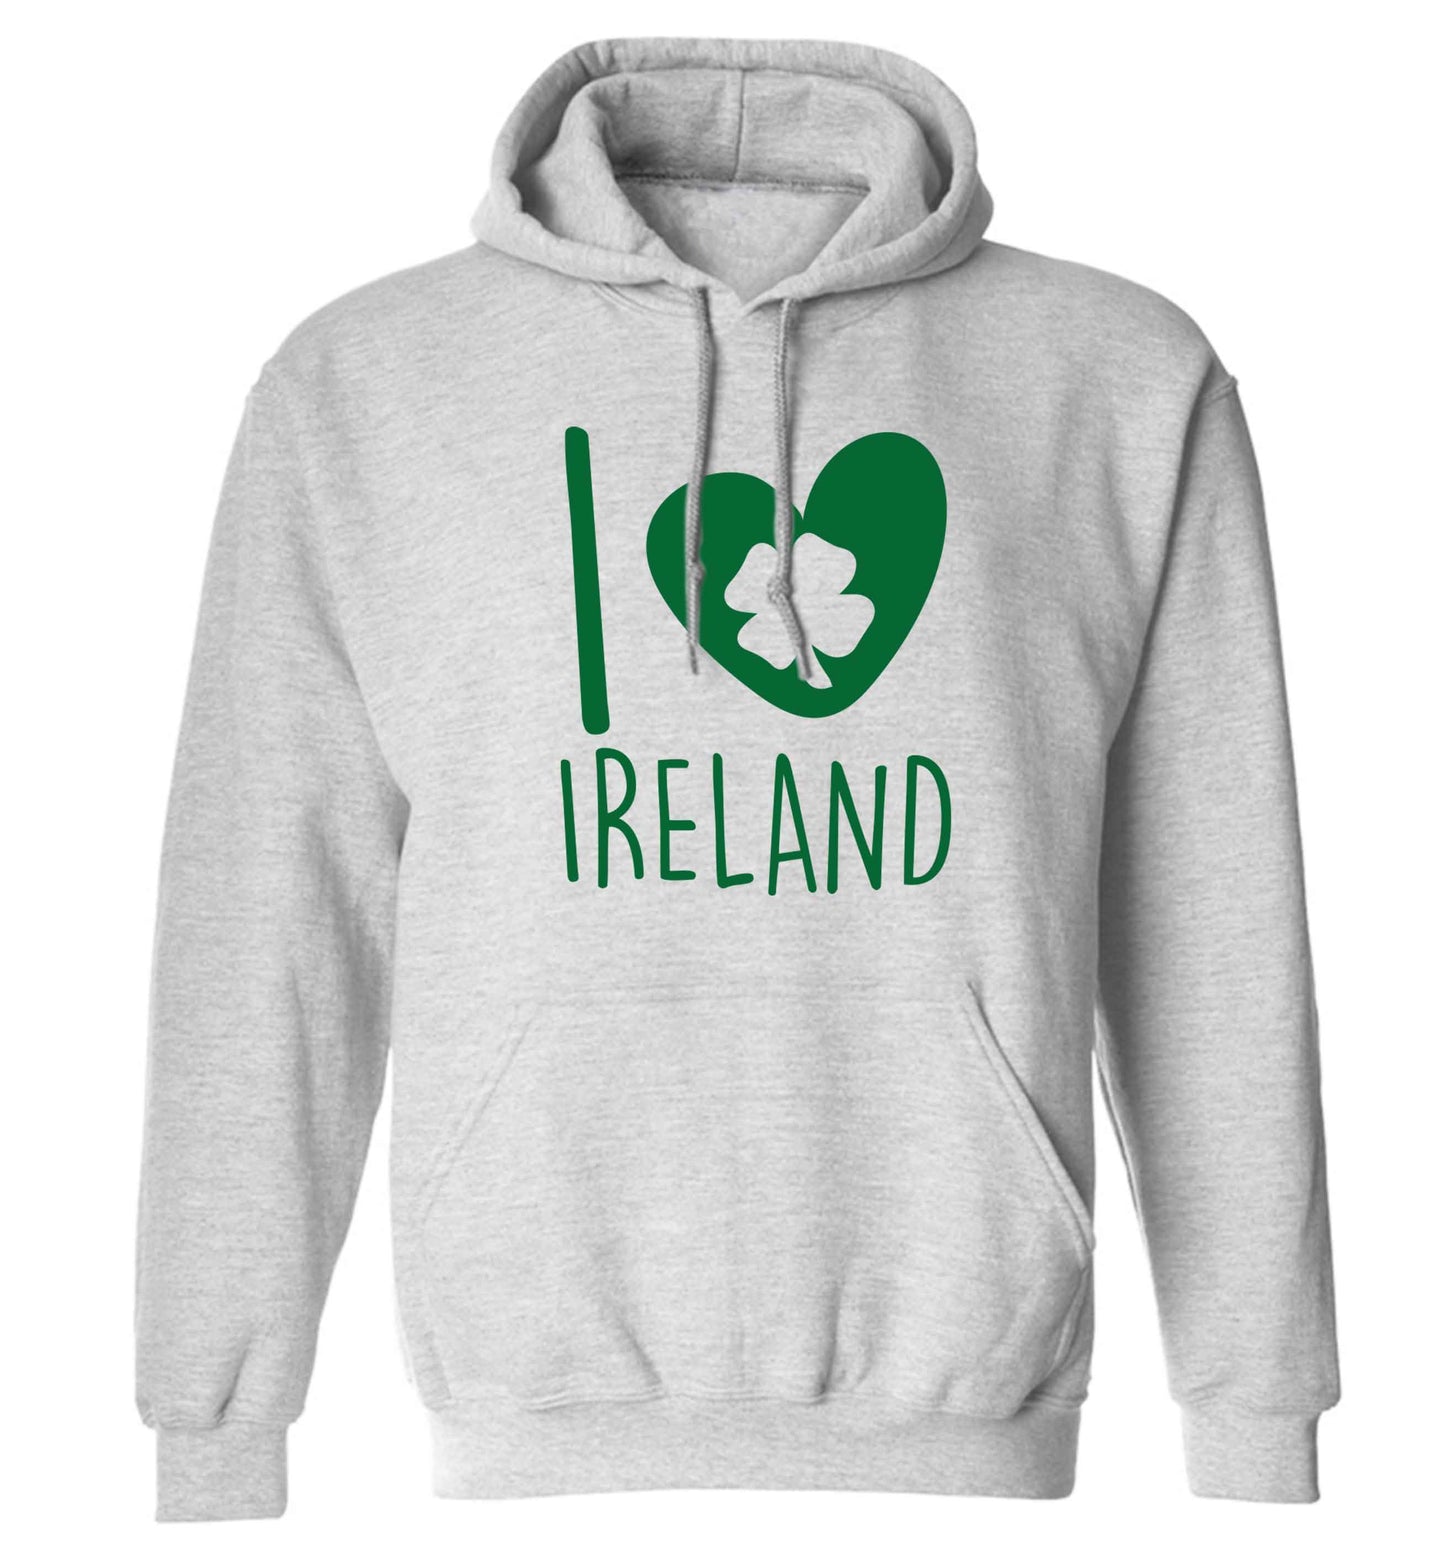 I love Ireland adults unisex grey hoodie 2XL